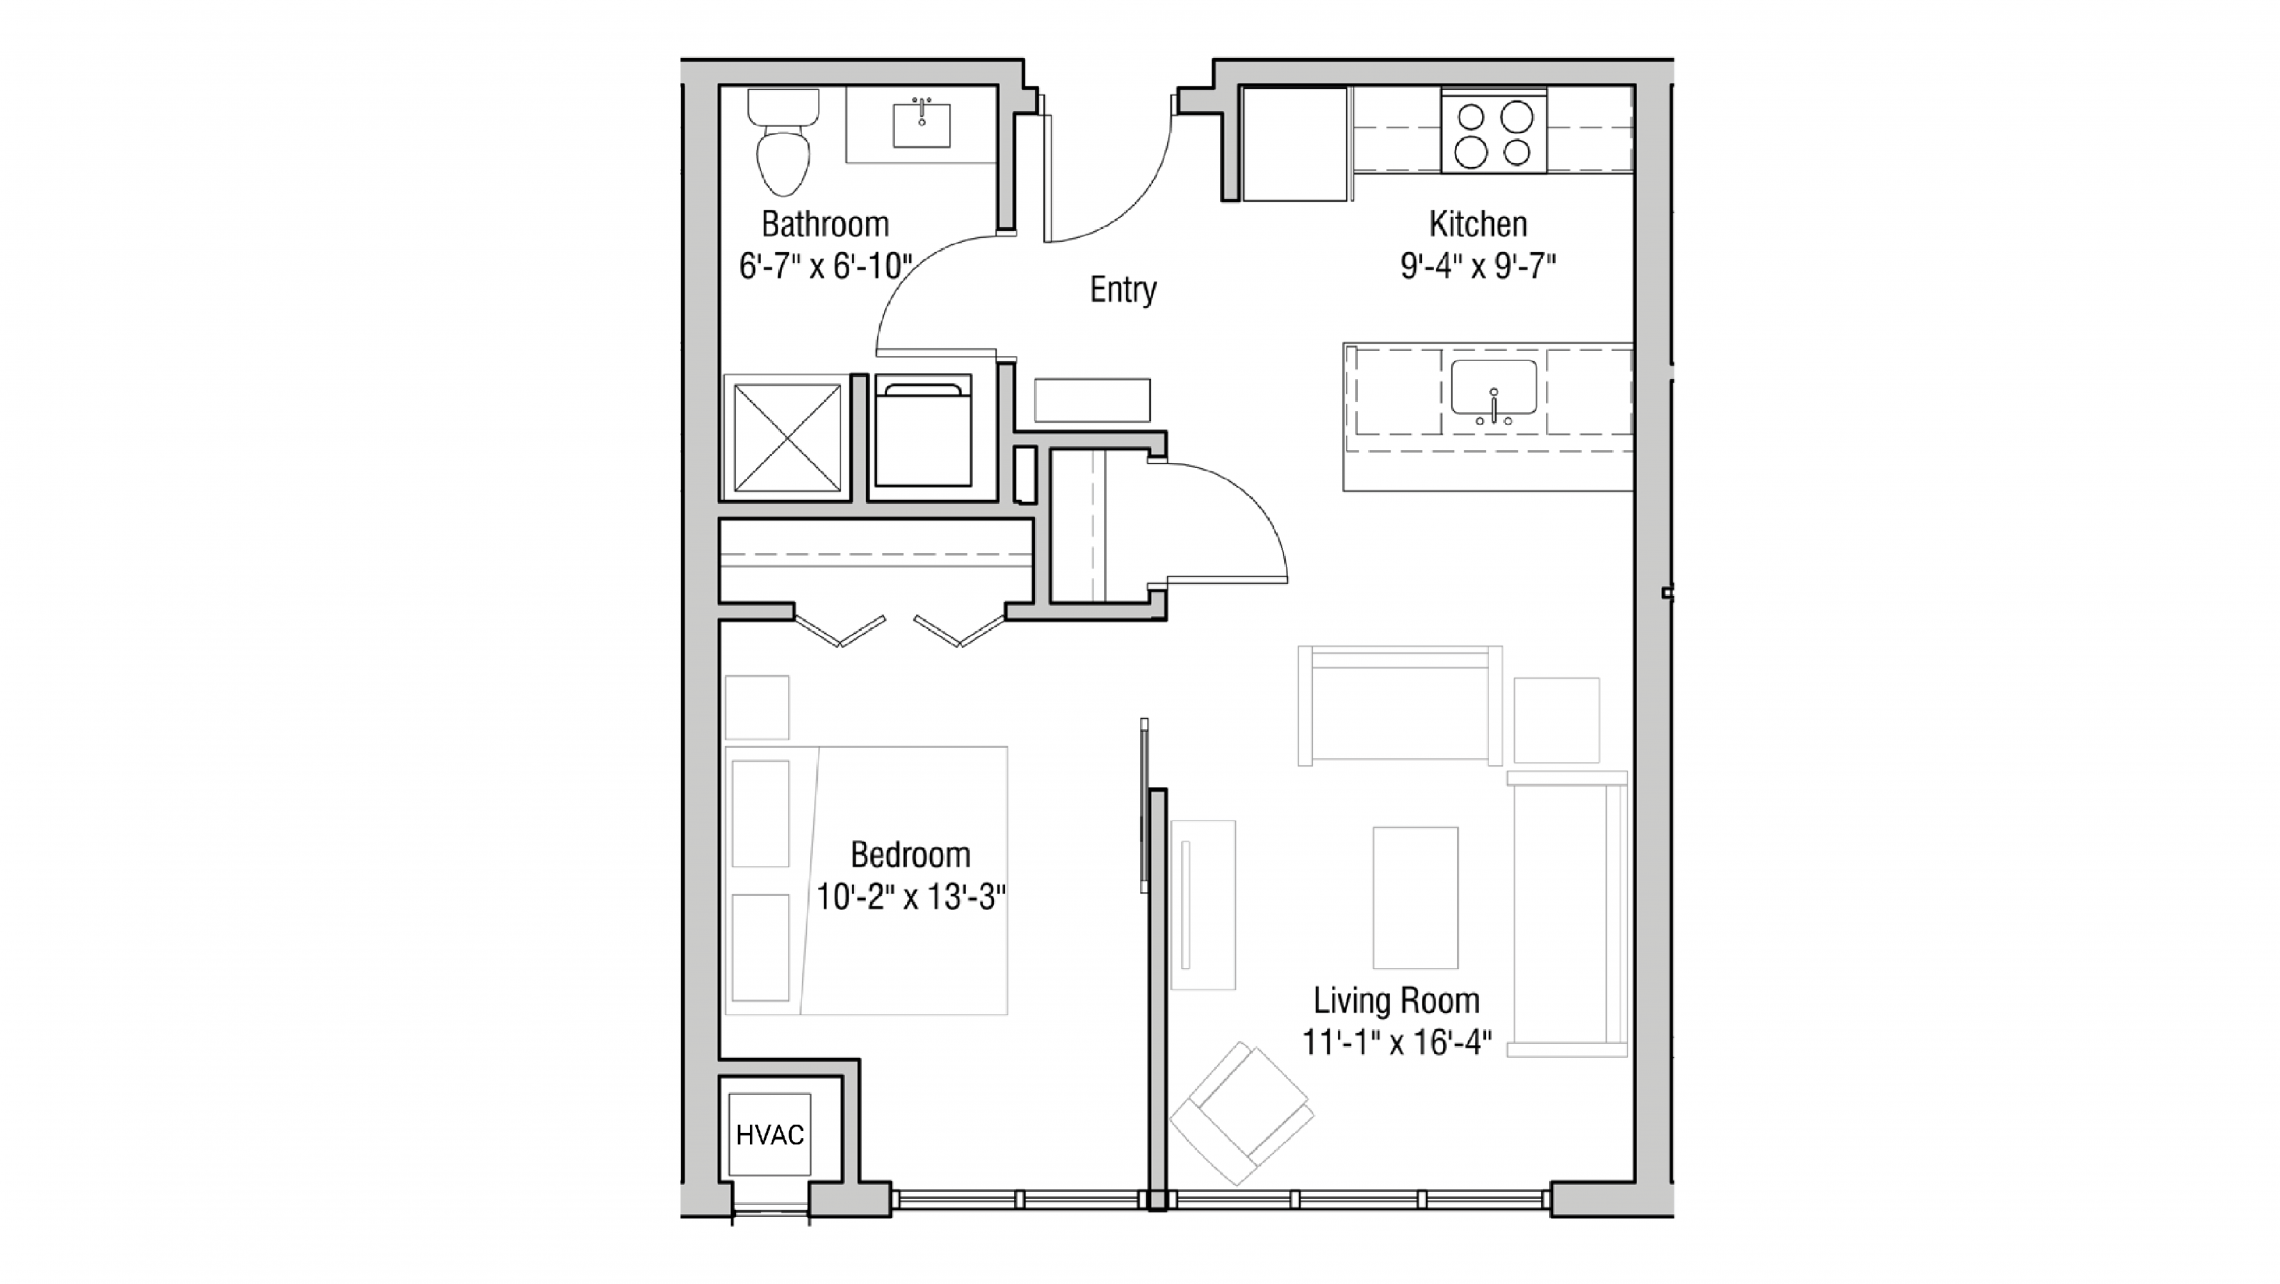 ULI Quarter Row 324 - One Bedroom, One Bathroom